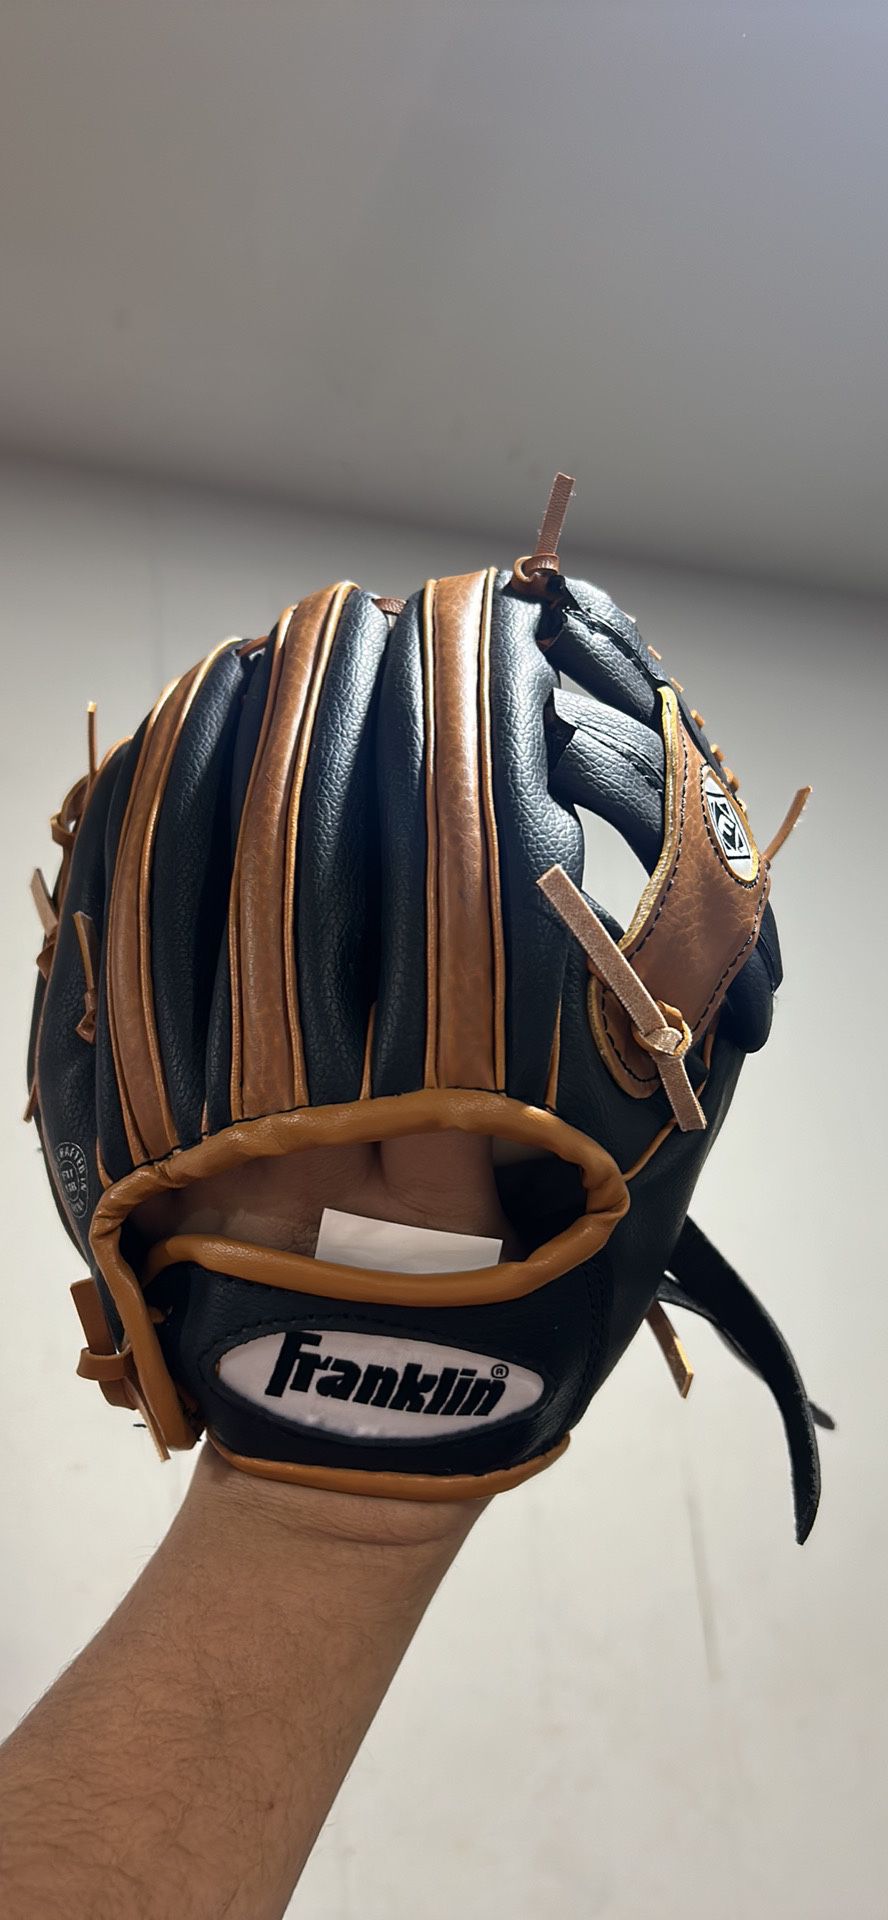 Franklin Kids Baseball Glove, 4809-9 1/2" Durabond Lacing Right Hand Teeball